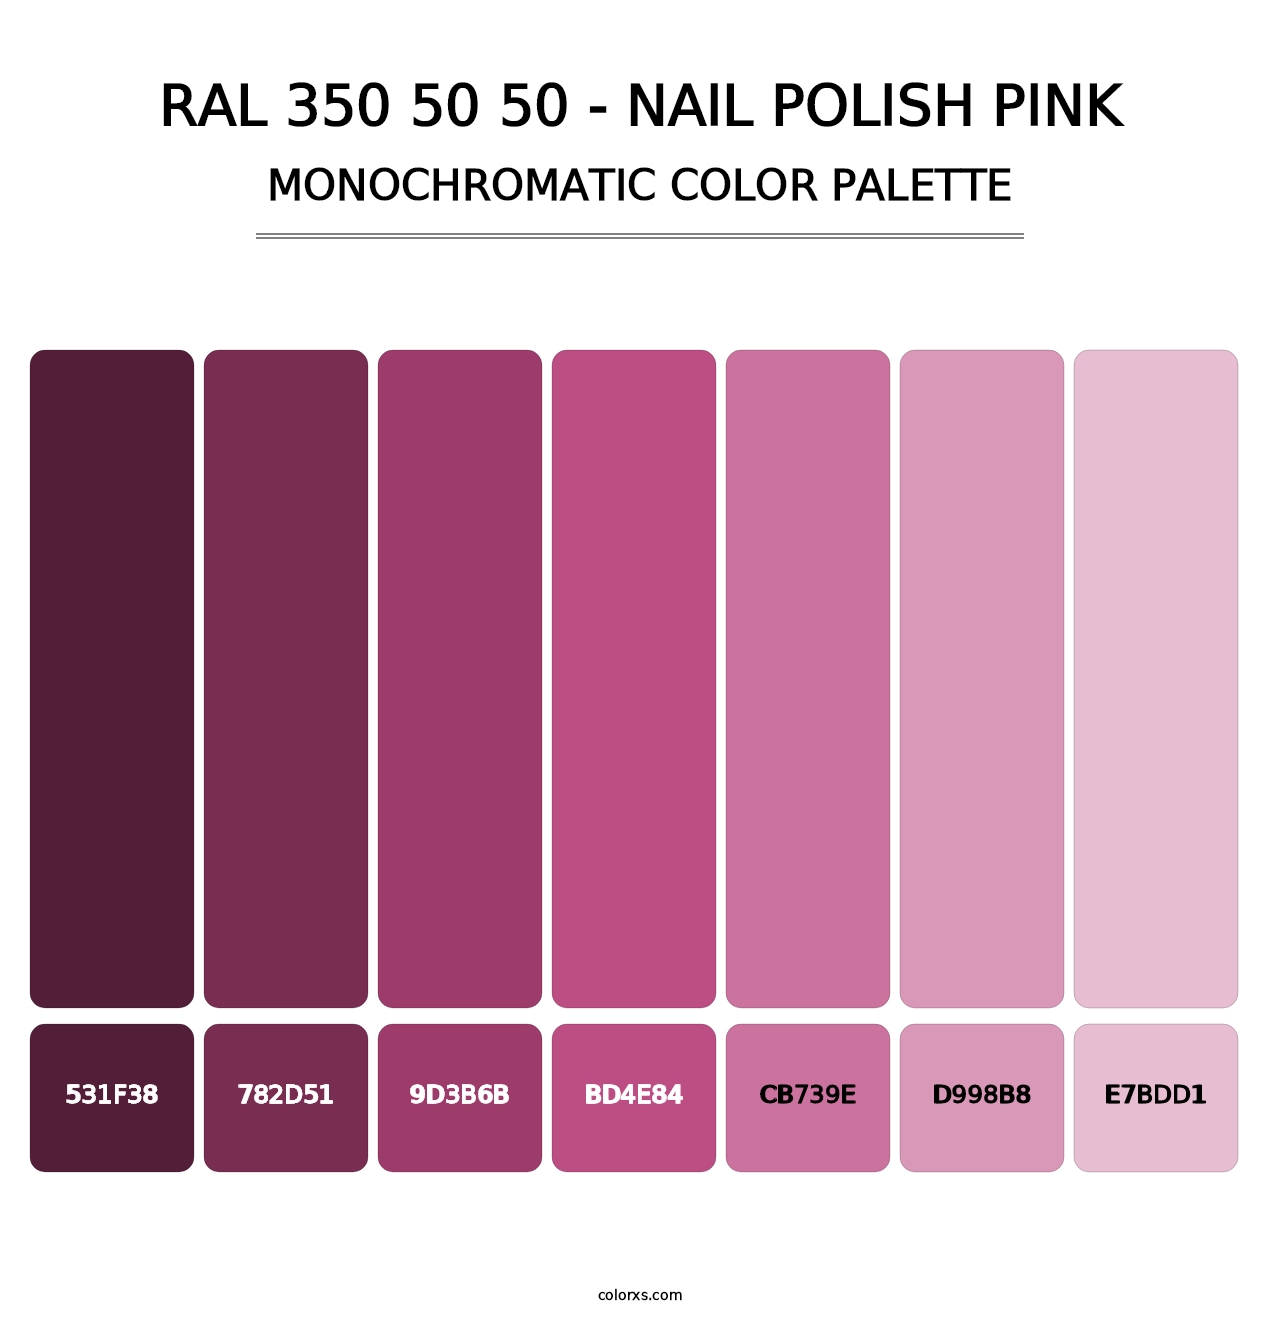 RAL 350 50 50 - Nail Polish Pink - Monochromatic Color Palette